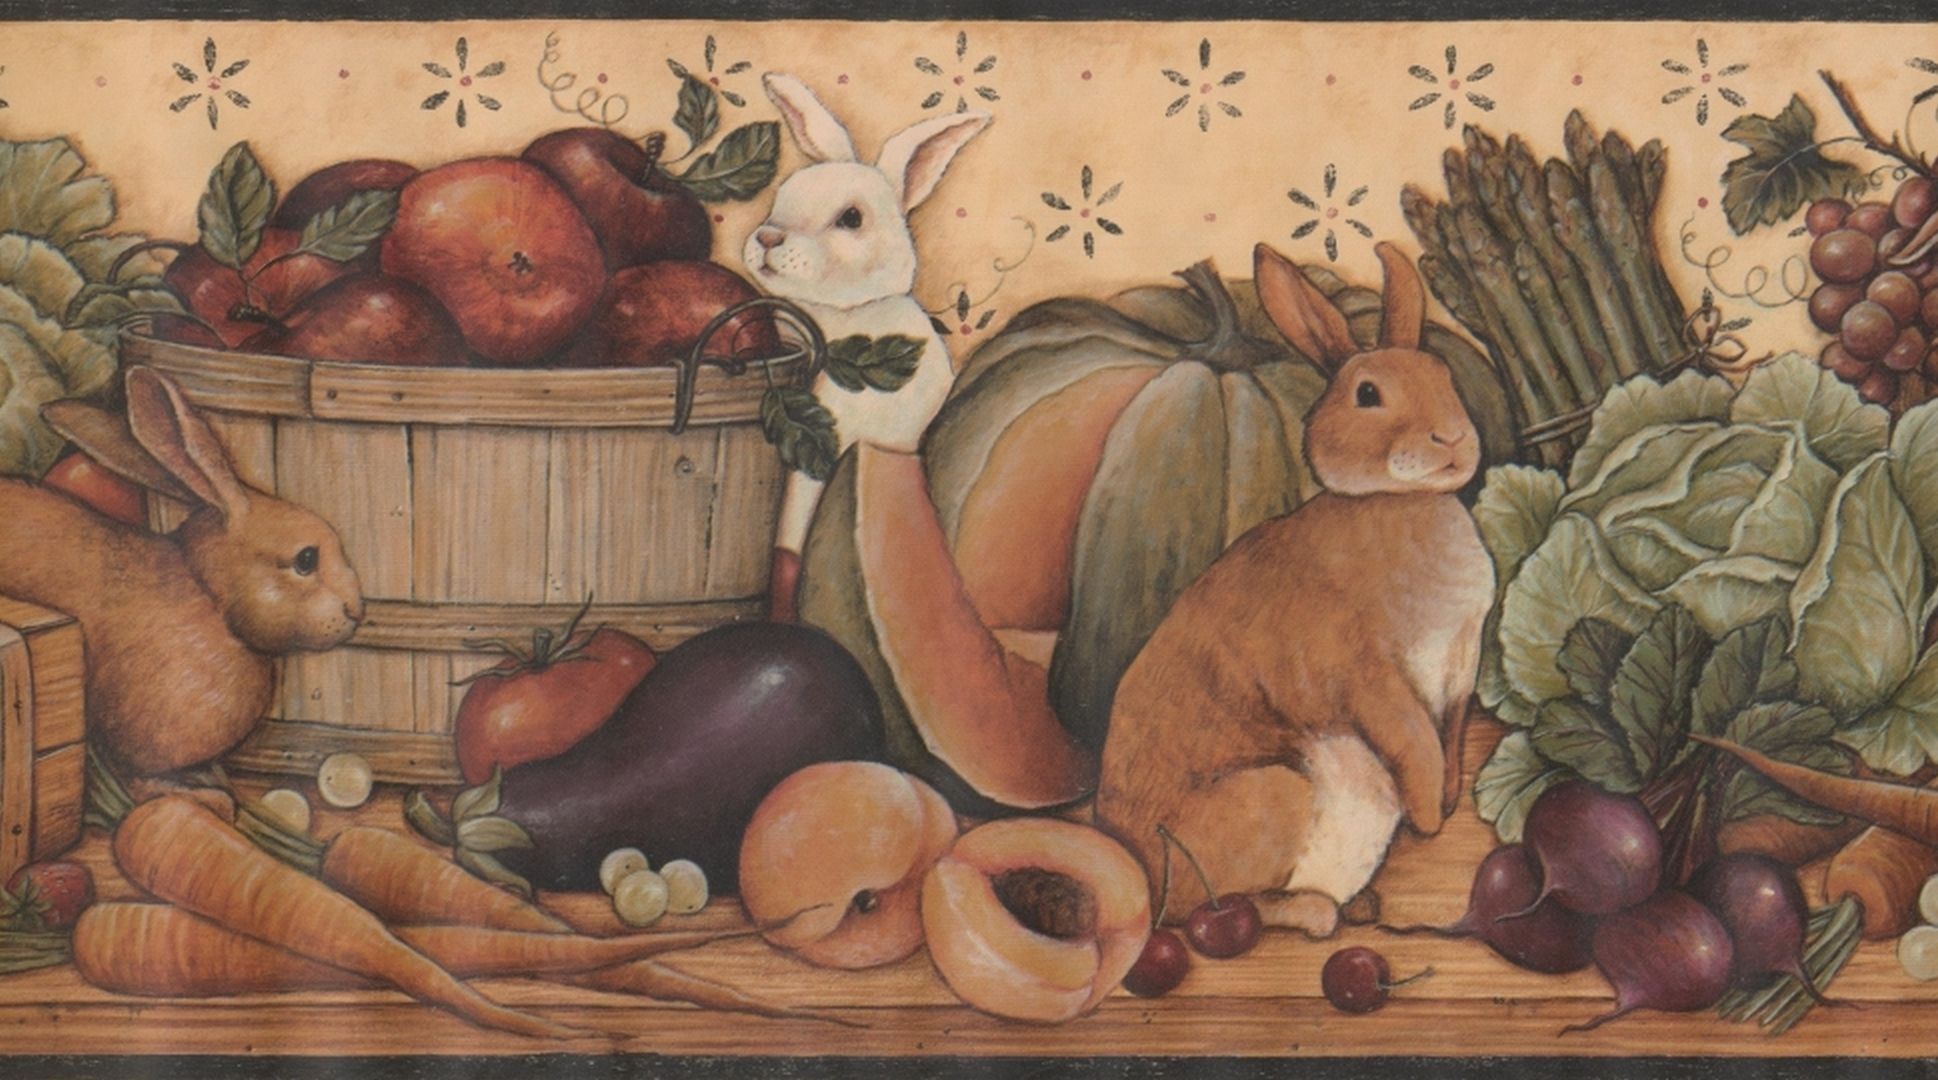 Brown White Rabbit Bunny Fruits Vegetables Basket Beige Wallpaper Border Retro Design, Roll 15' x 9